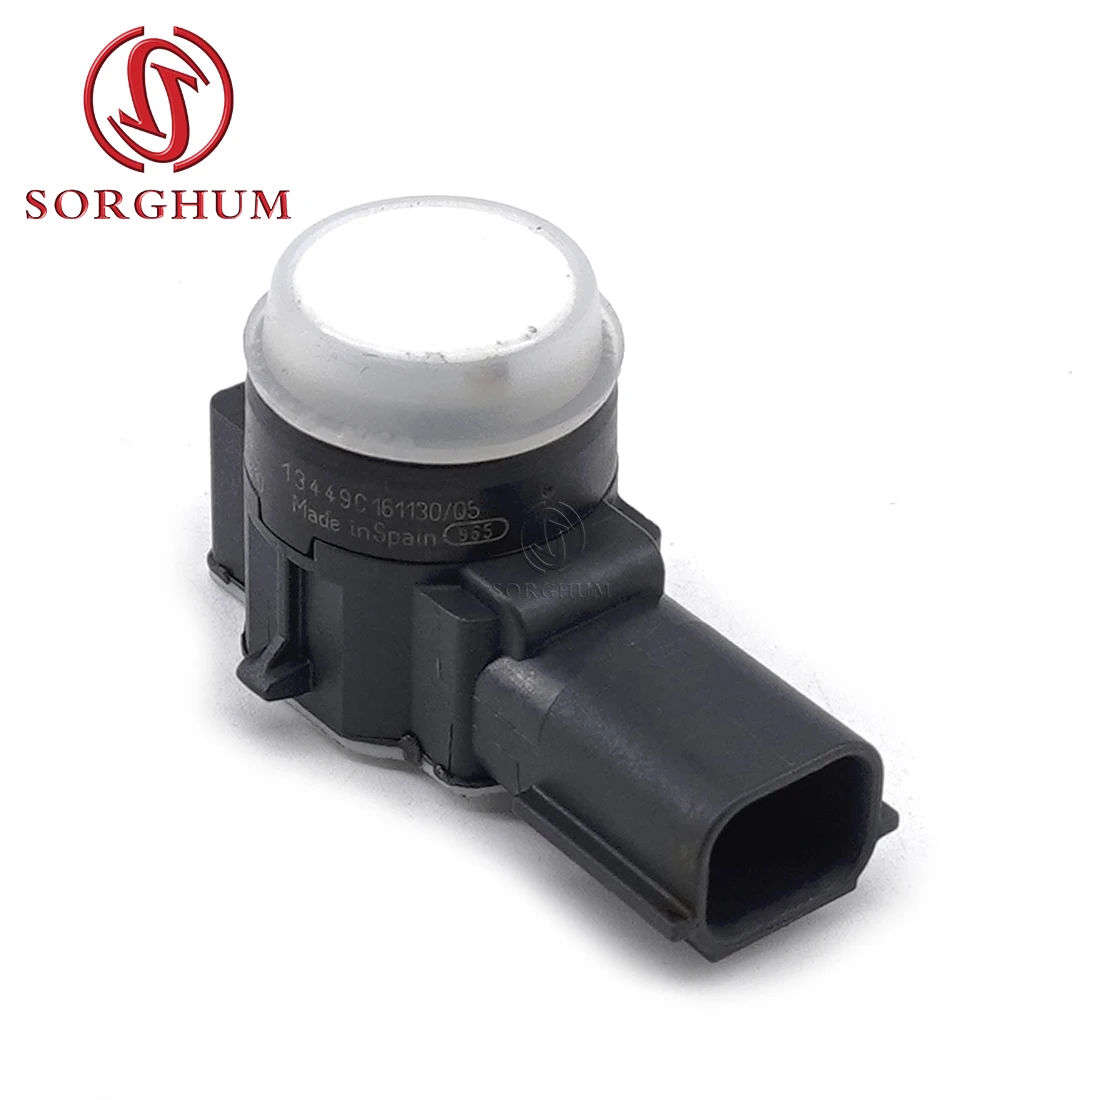 SORGHUM Car Parking Sensor PDC Reversing Aid System Bumper For GMC Sierra Yukon 2014-2019 52019546 0263013810 52050134